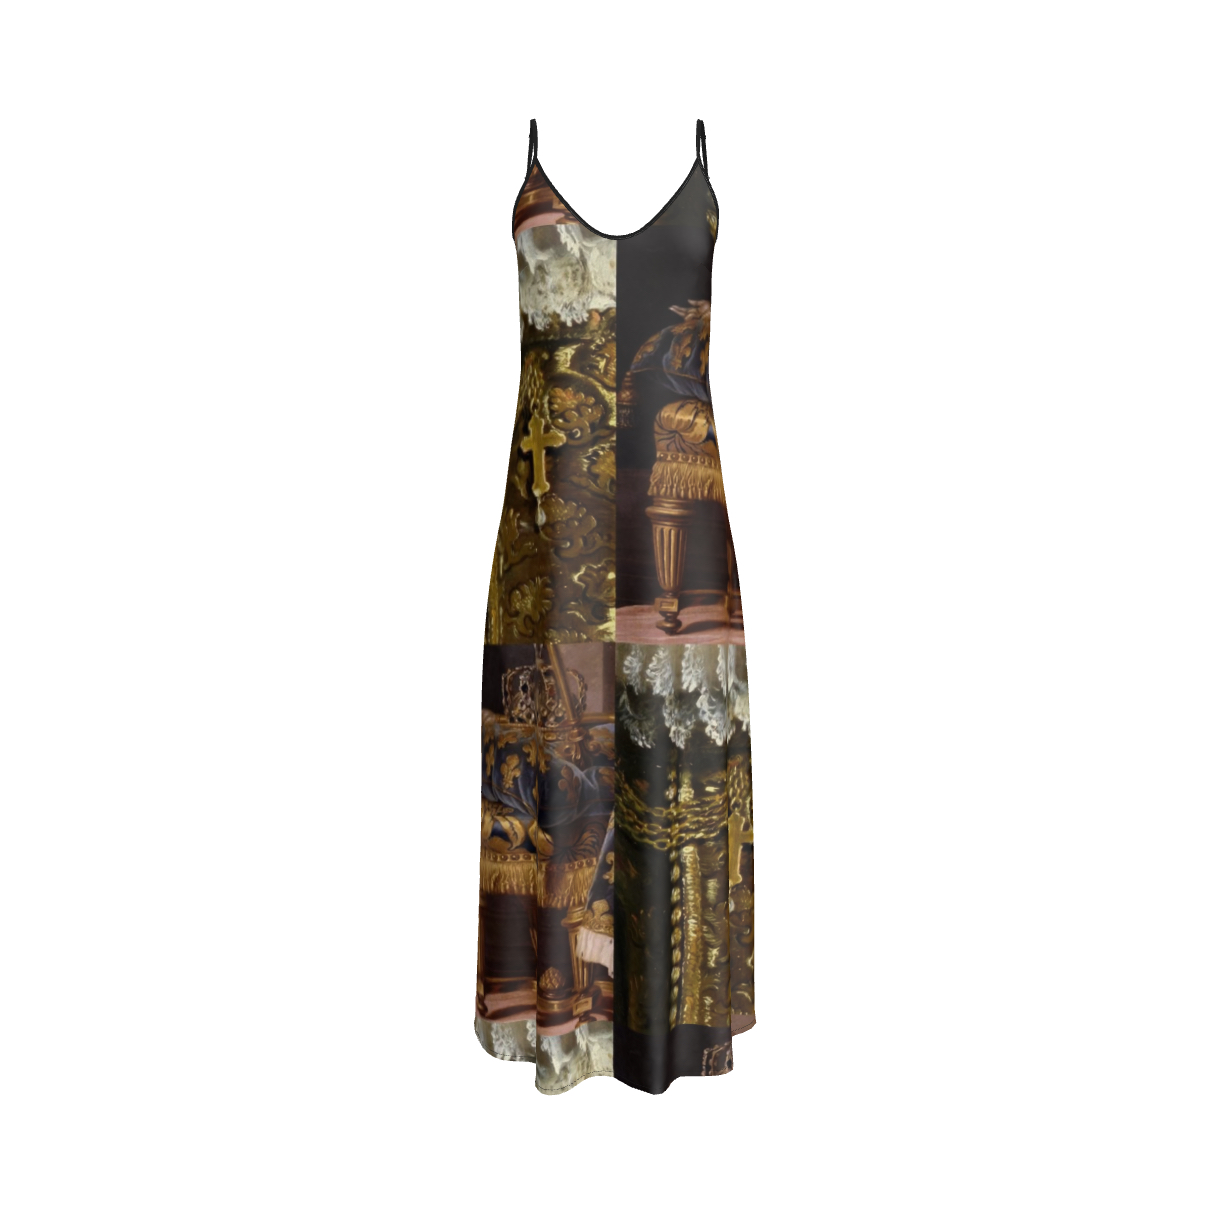 Dress | alemais dress sandro dress bronx and banco dress